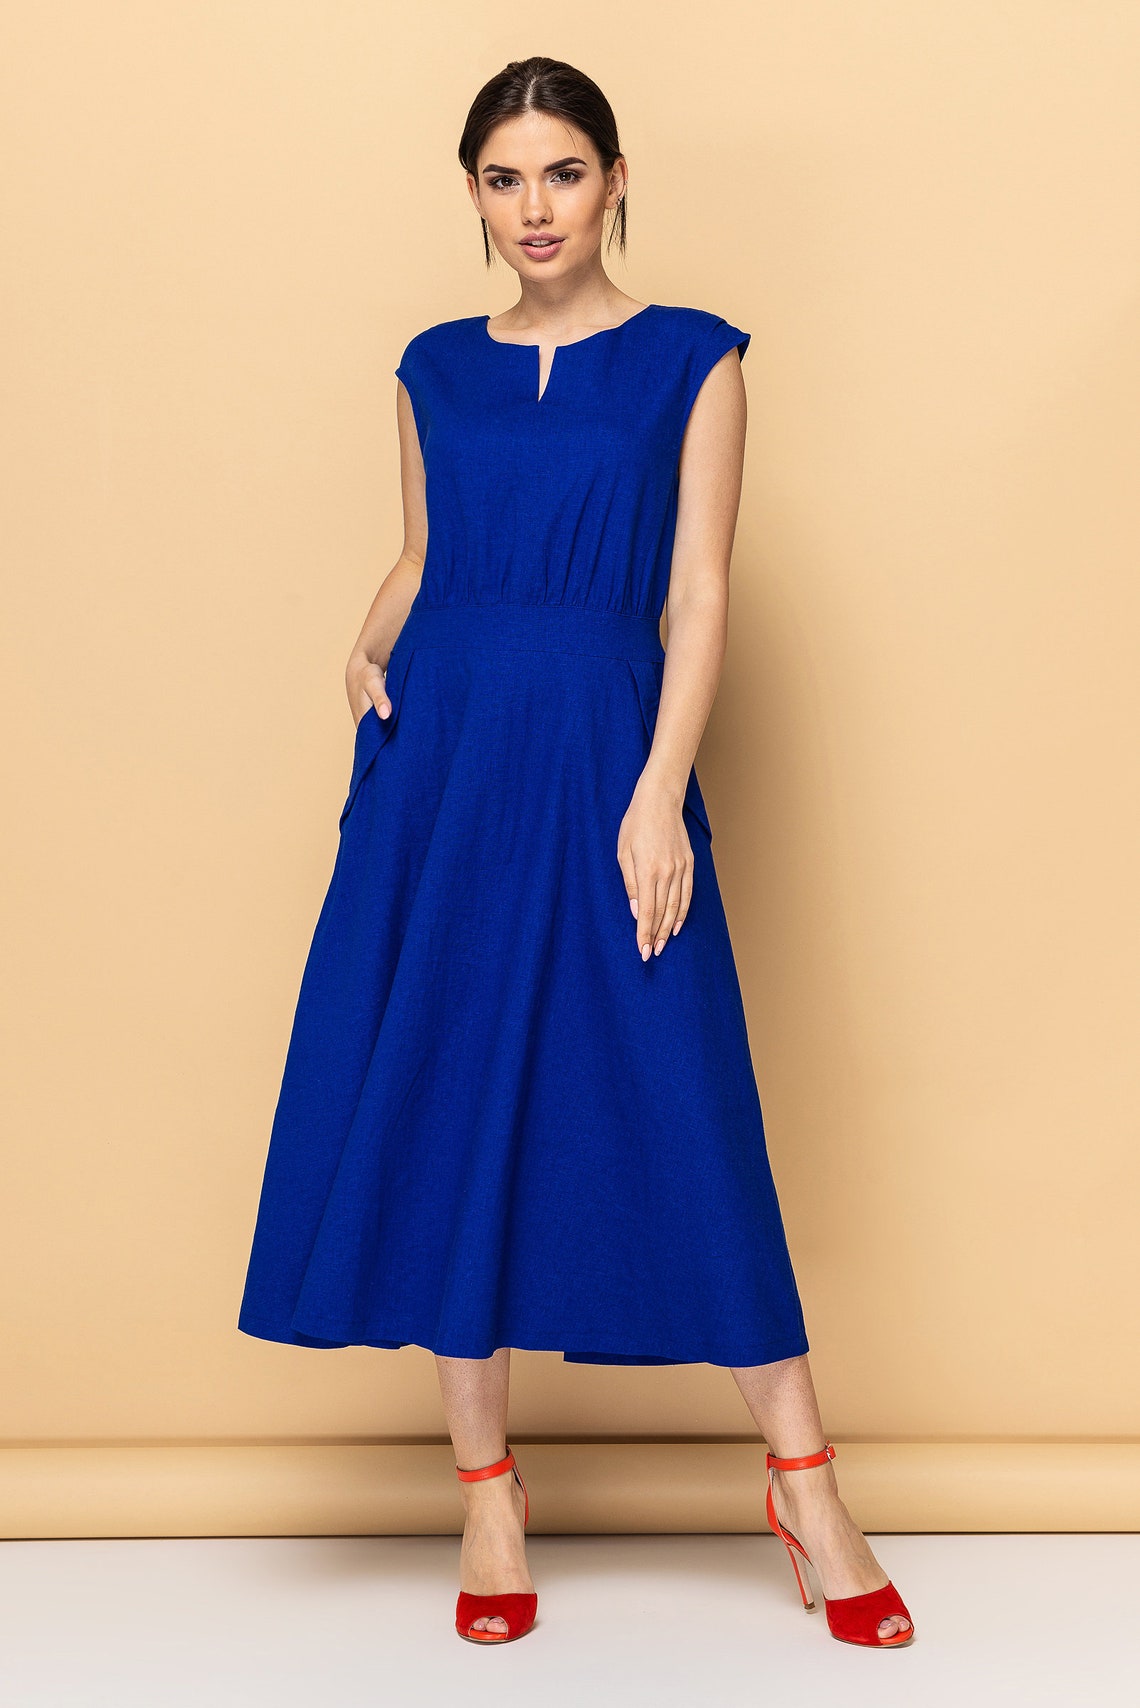 Linen Dress With Pockets Summer Dresses for Women Modest | Etsy